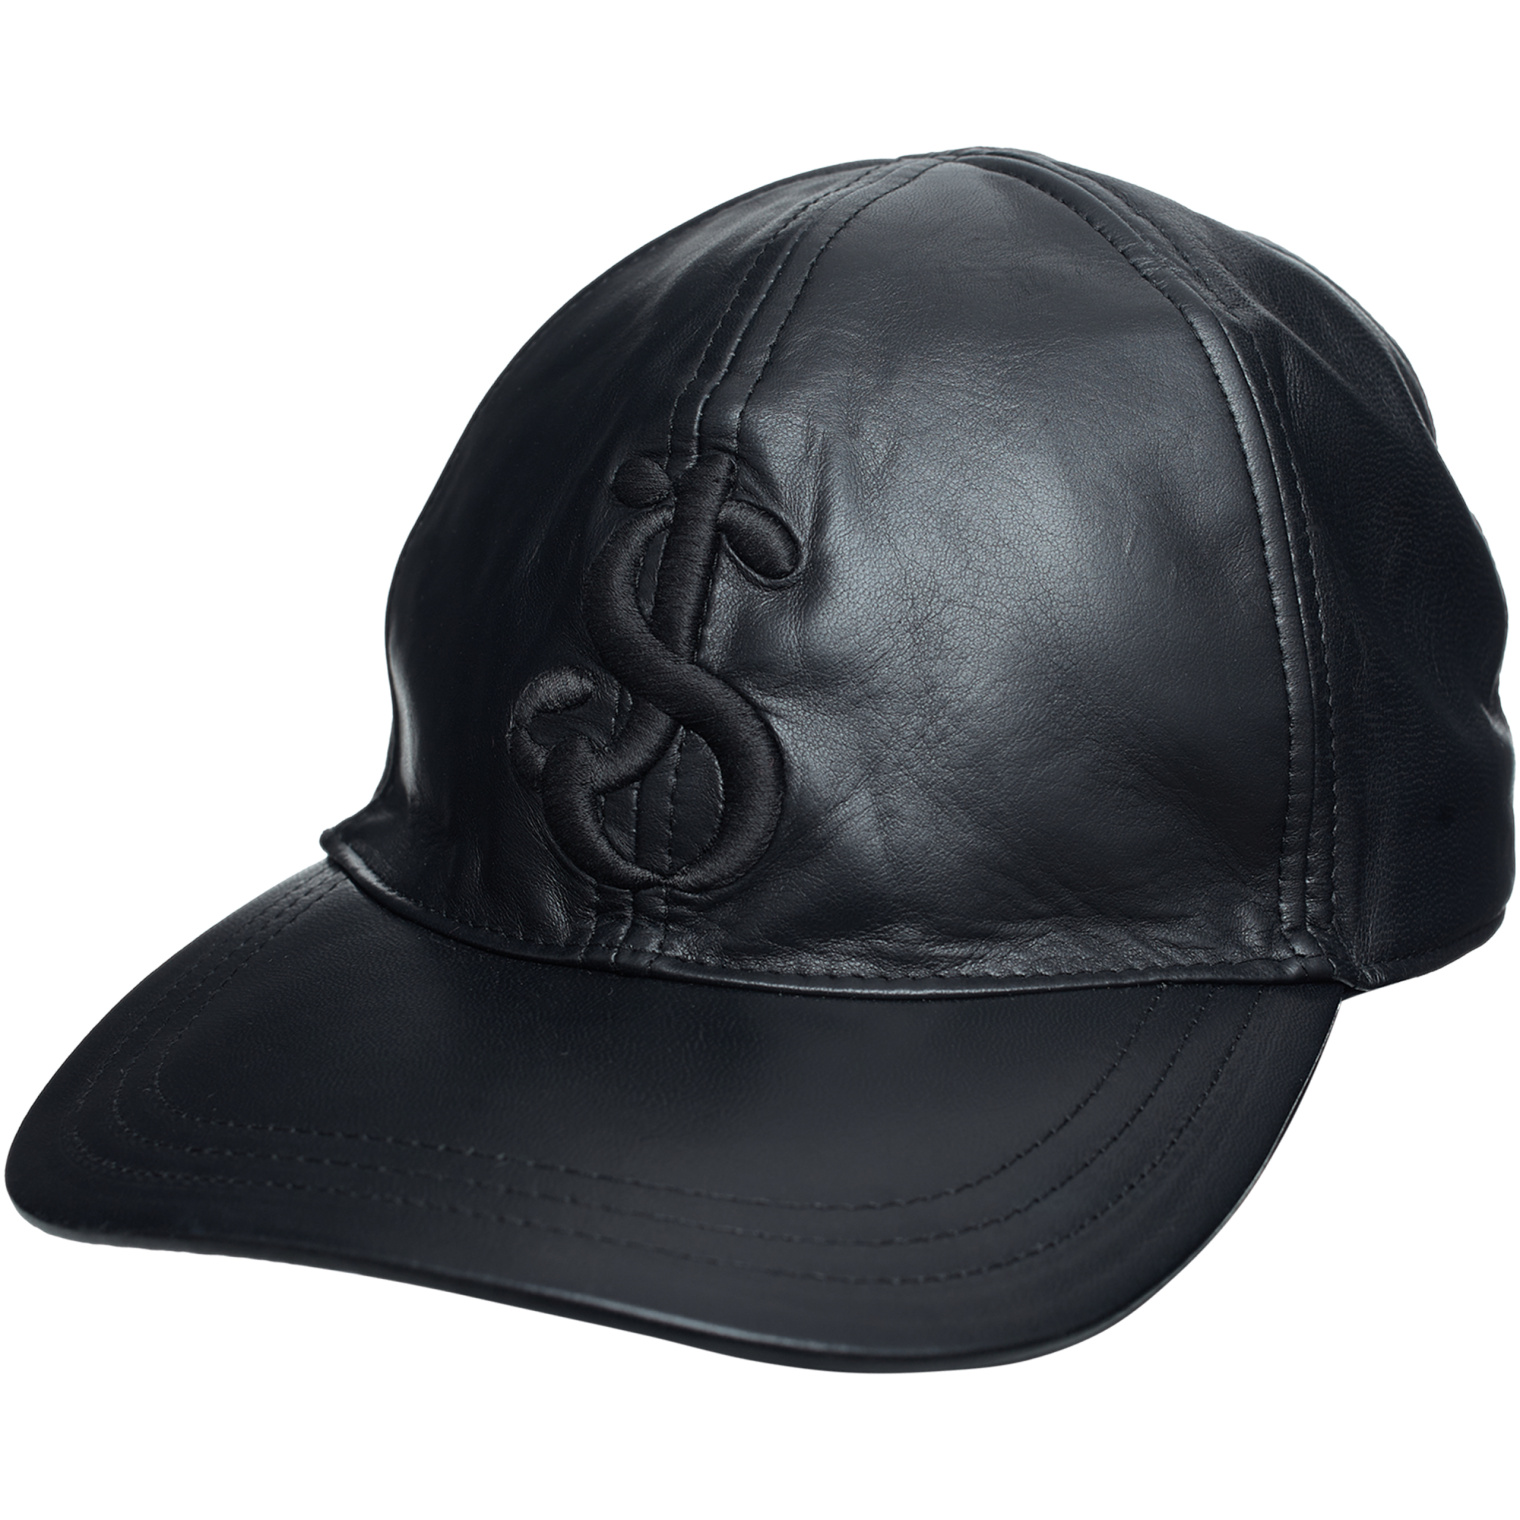 Jil Sander Black leather cap